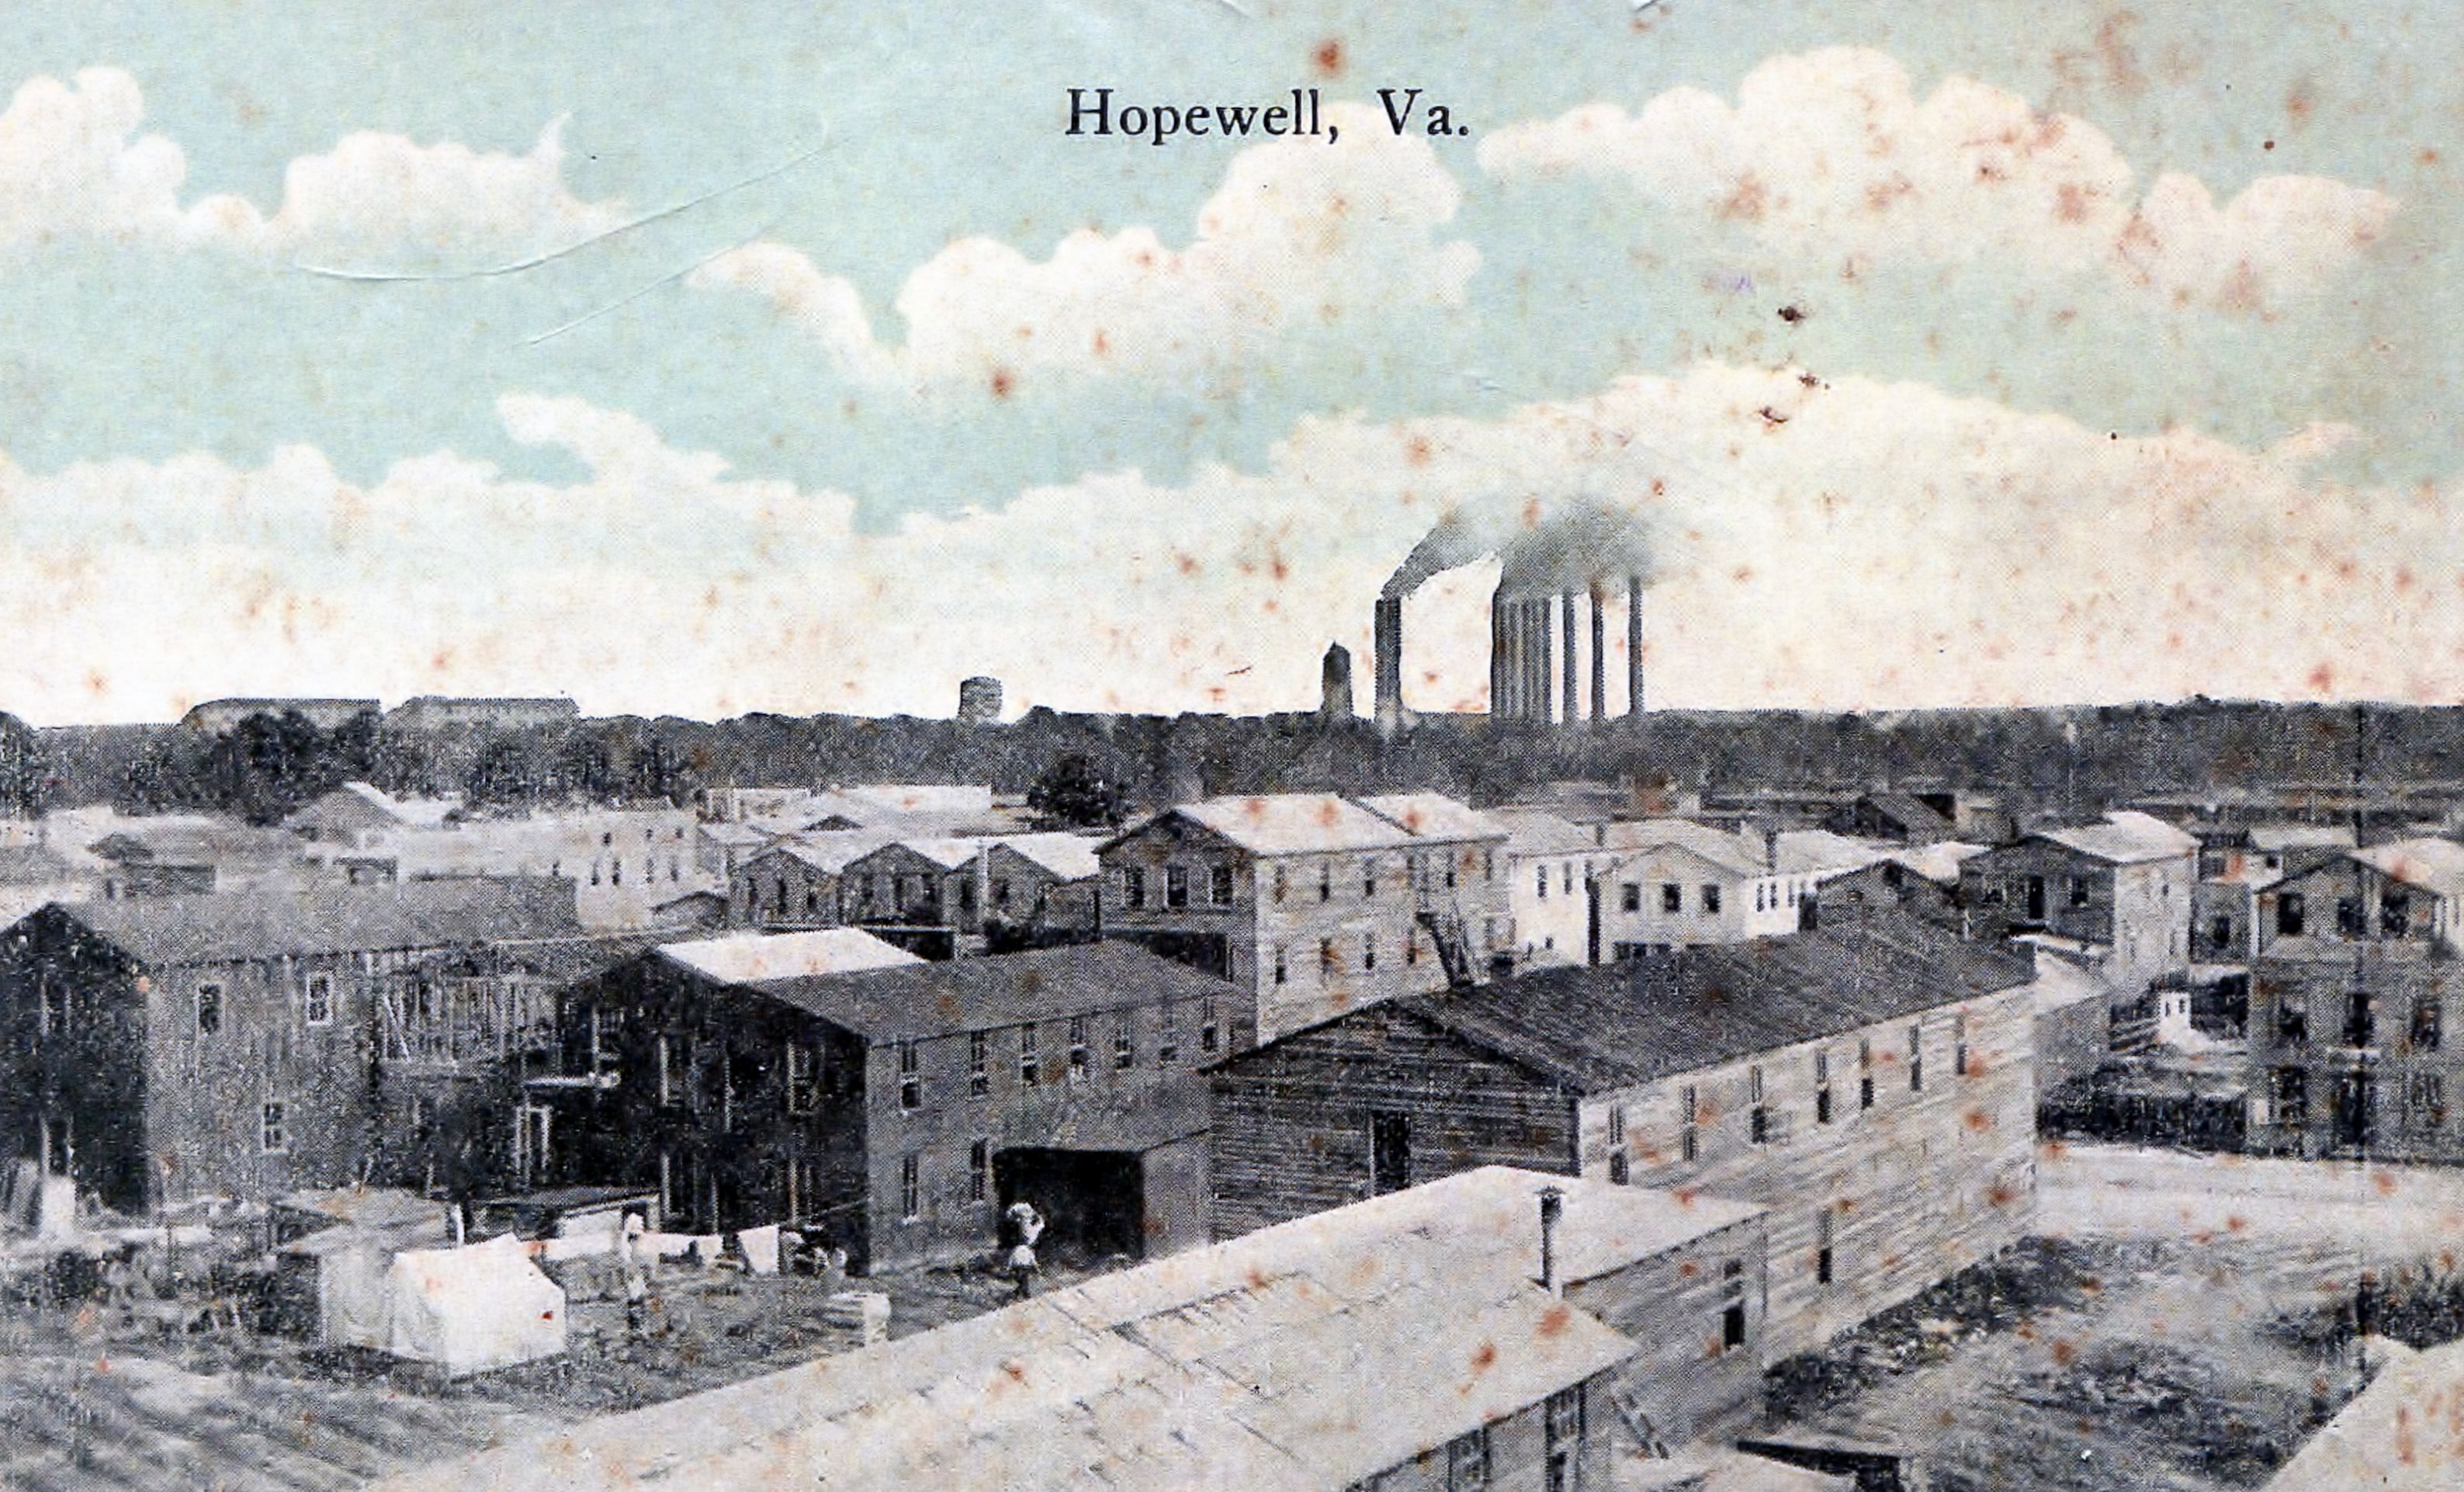 Hopewell VA during World War I